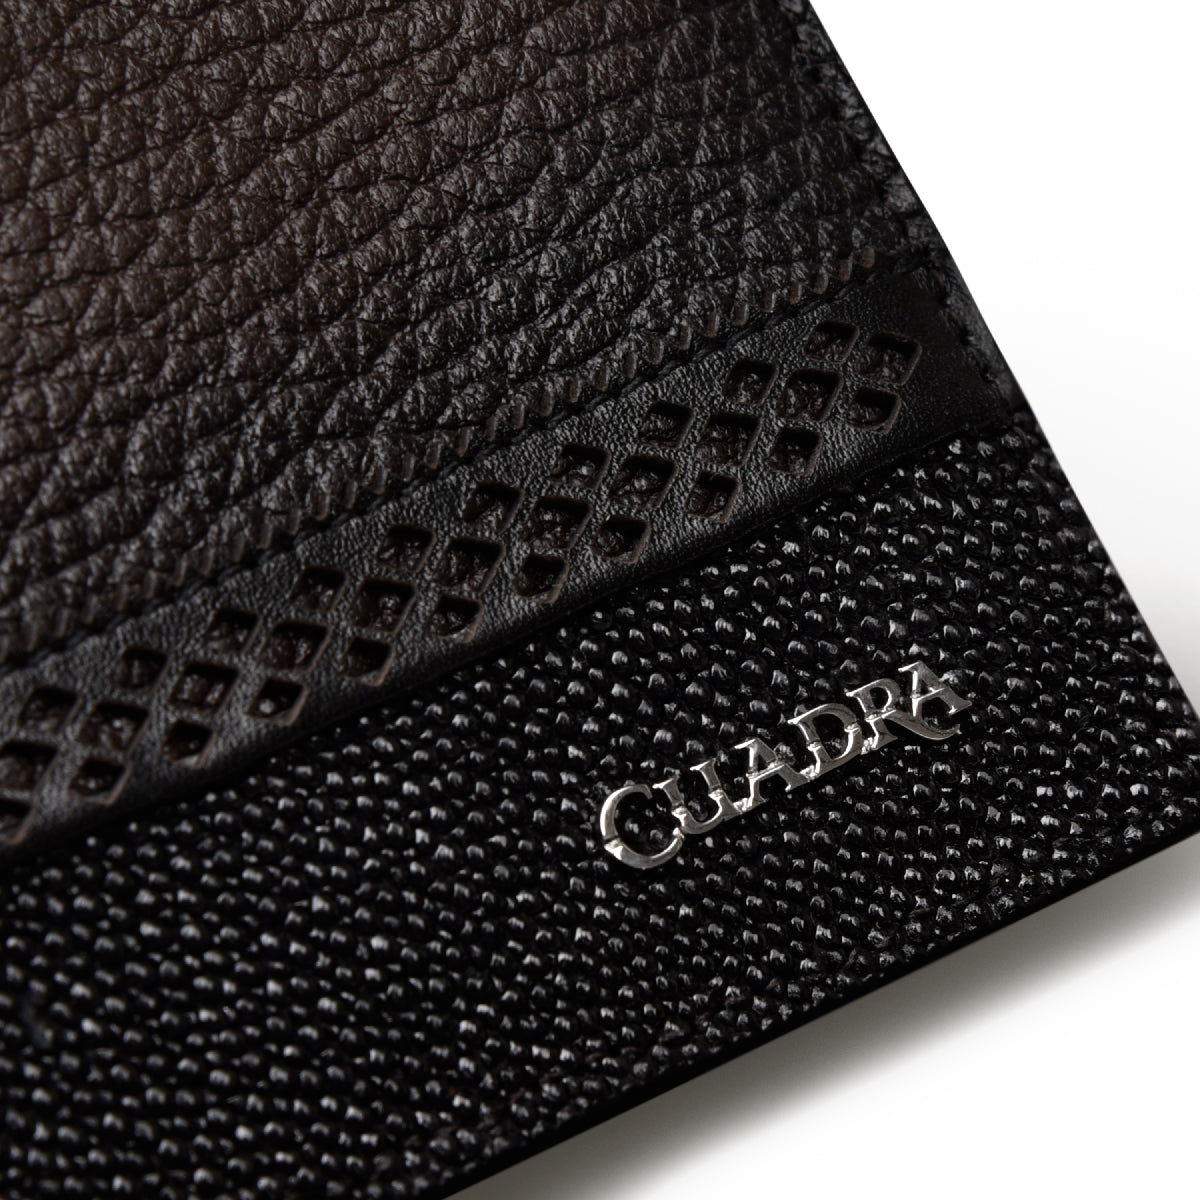 Handmade bi-tone stingray leather wallet